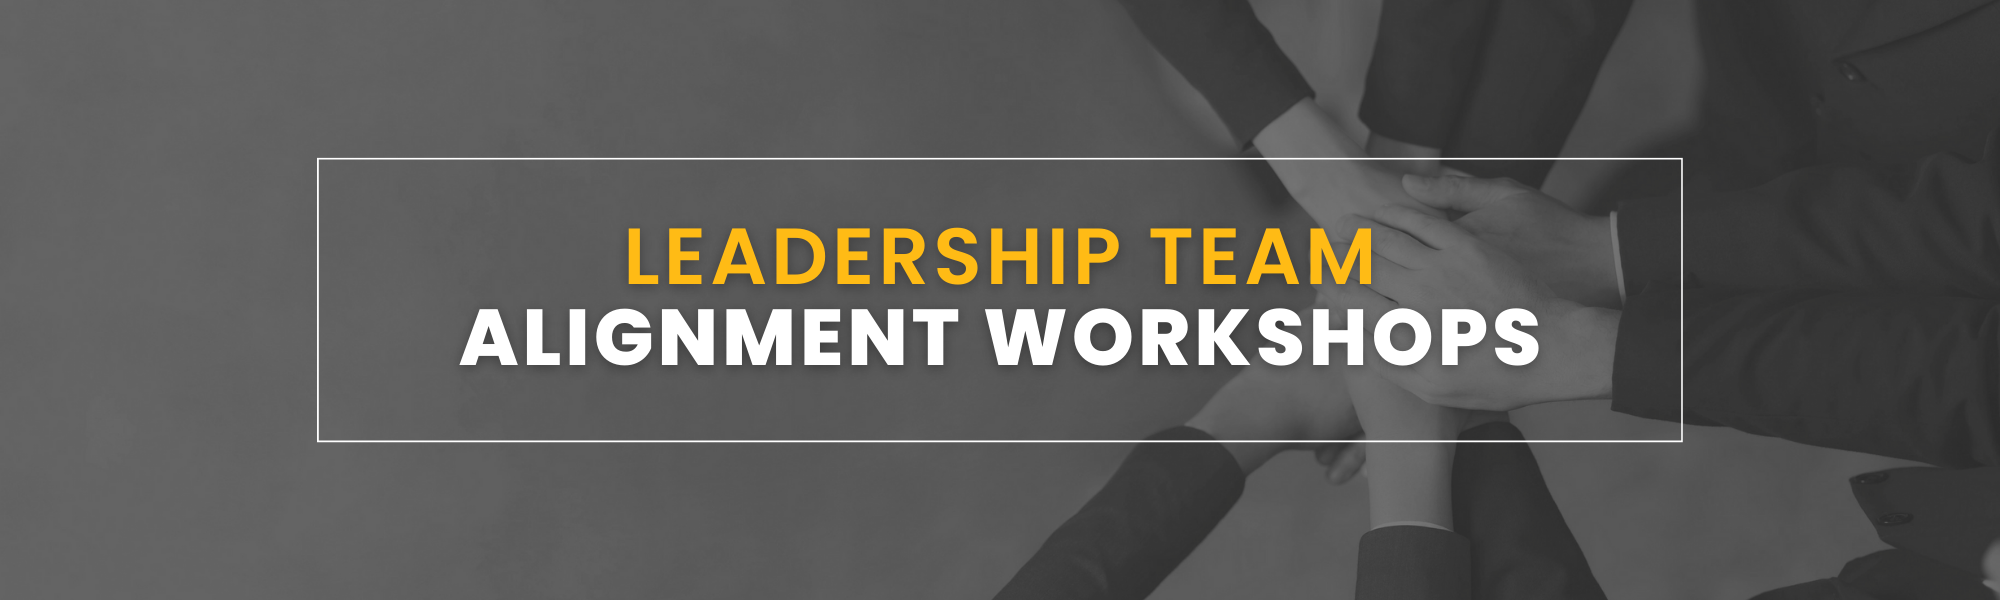 Leadership Team Alignment Workshops